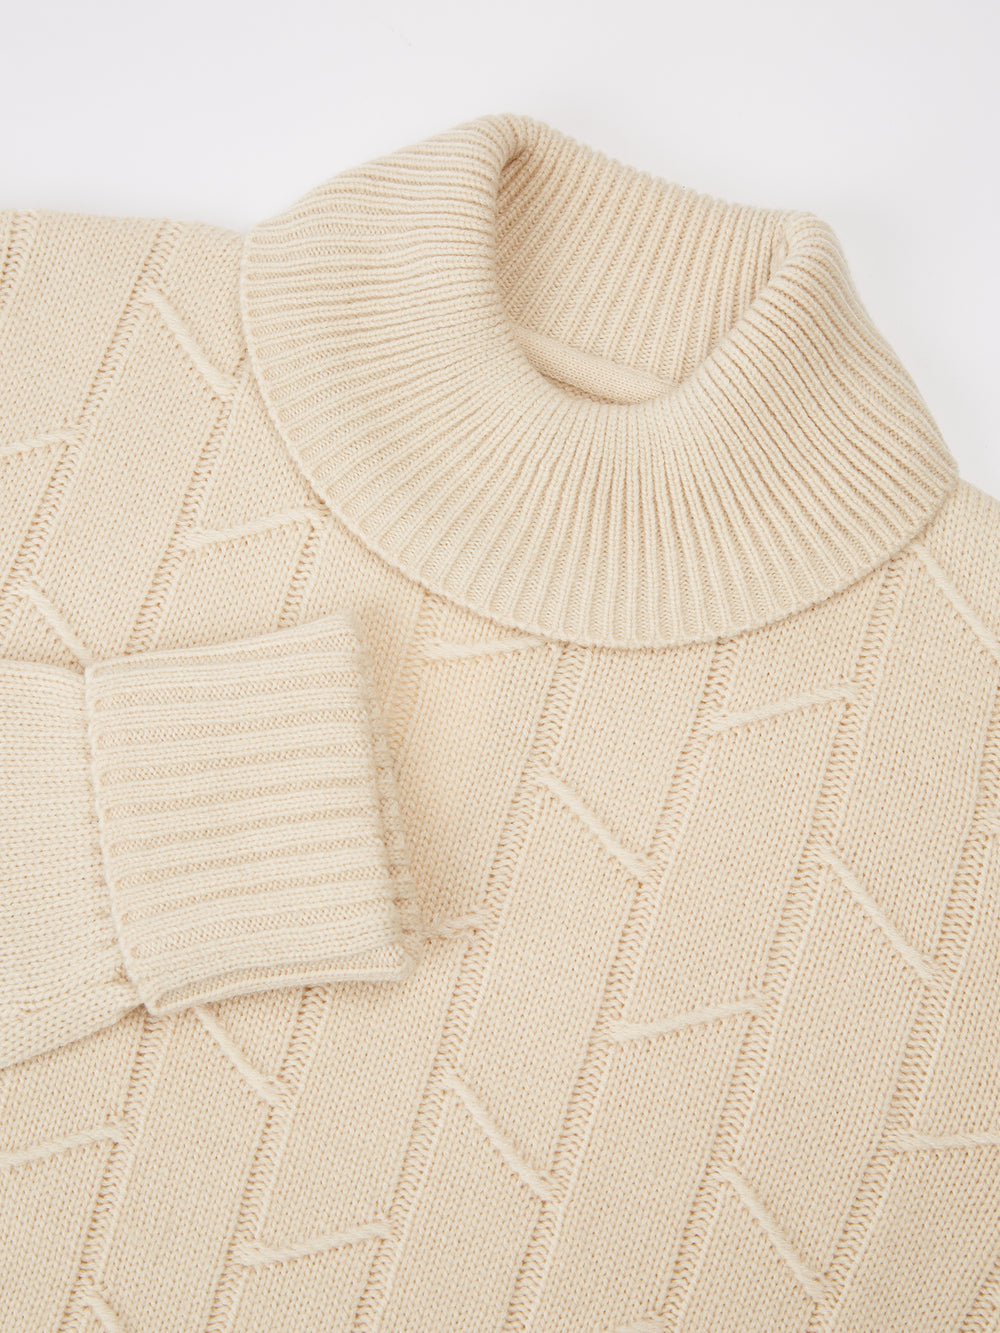 Patterned Knit Roll-Neck Sweater - Ivory - Ben Sherman